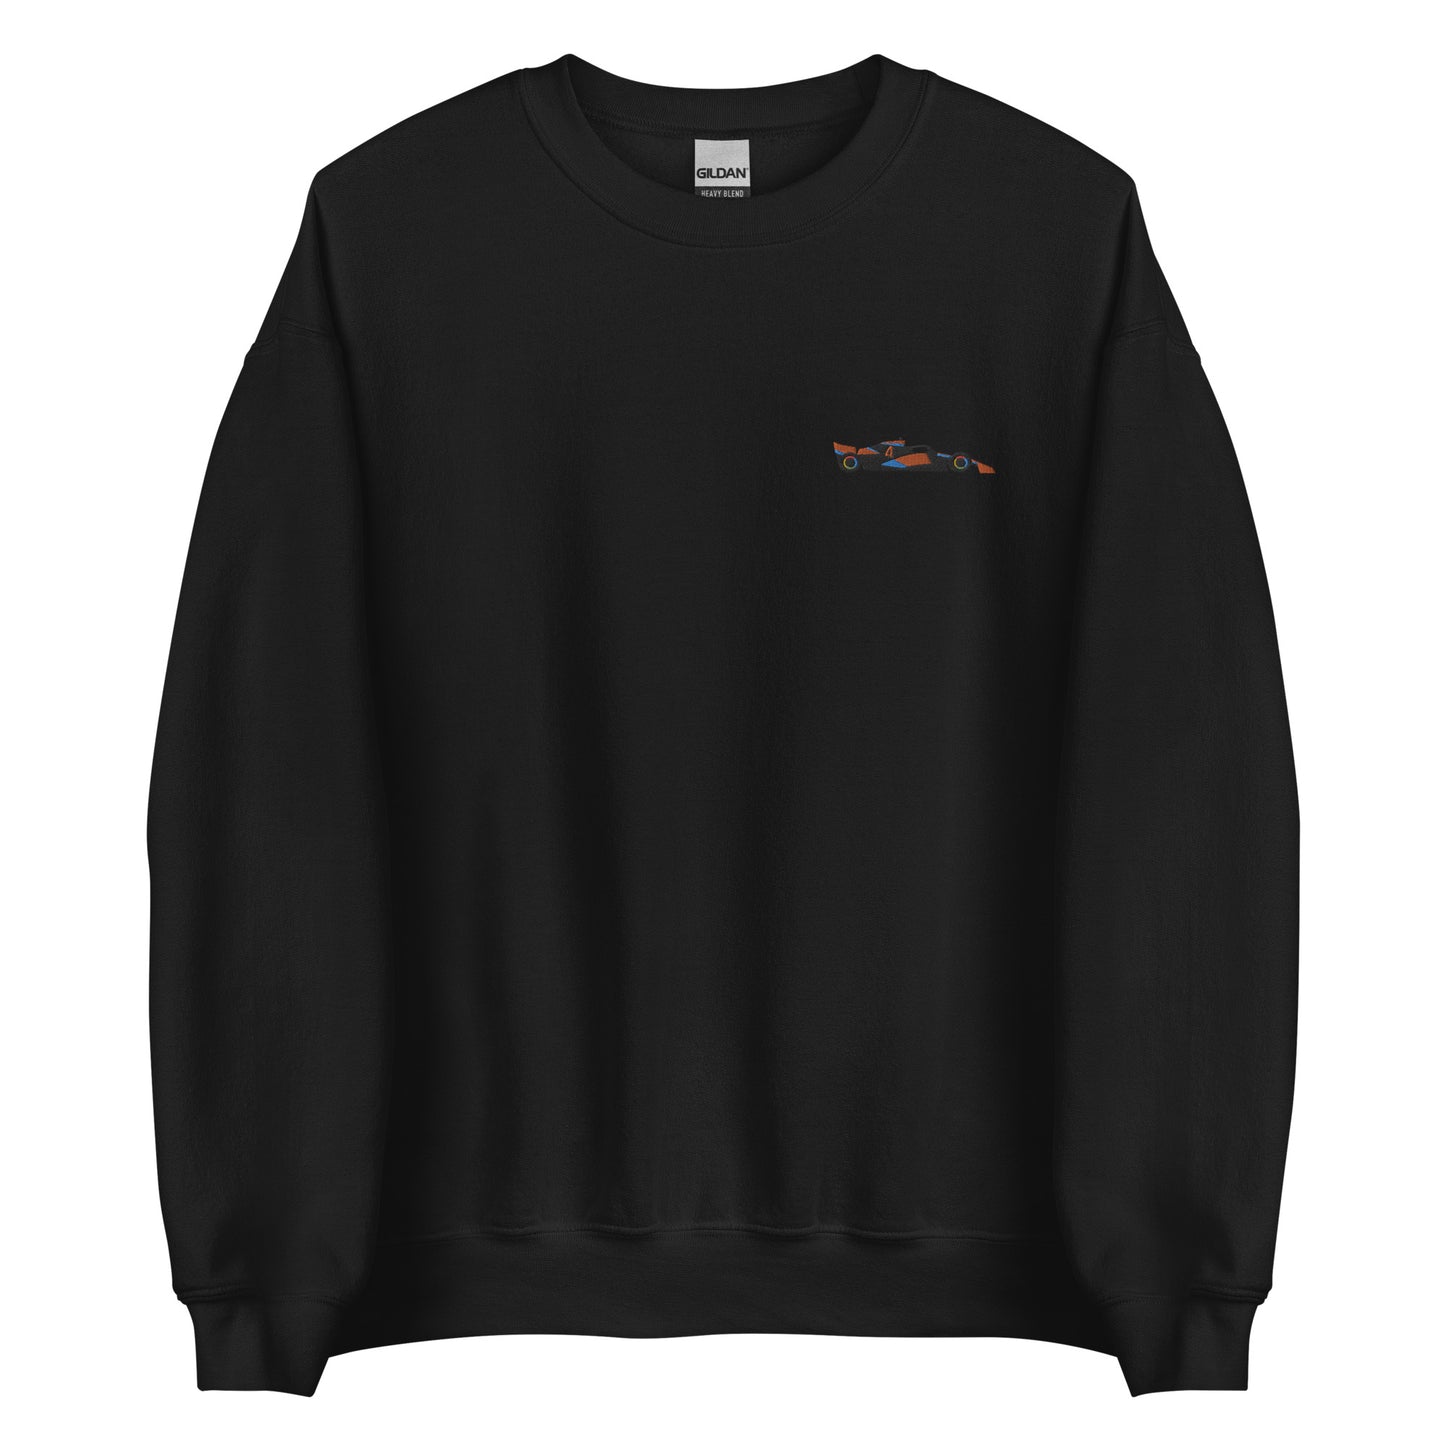 Embroidered mclaren f1 car sweater black